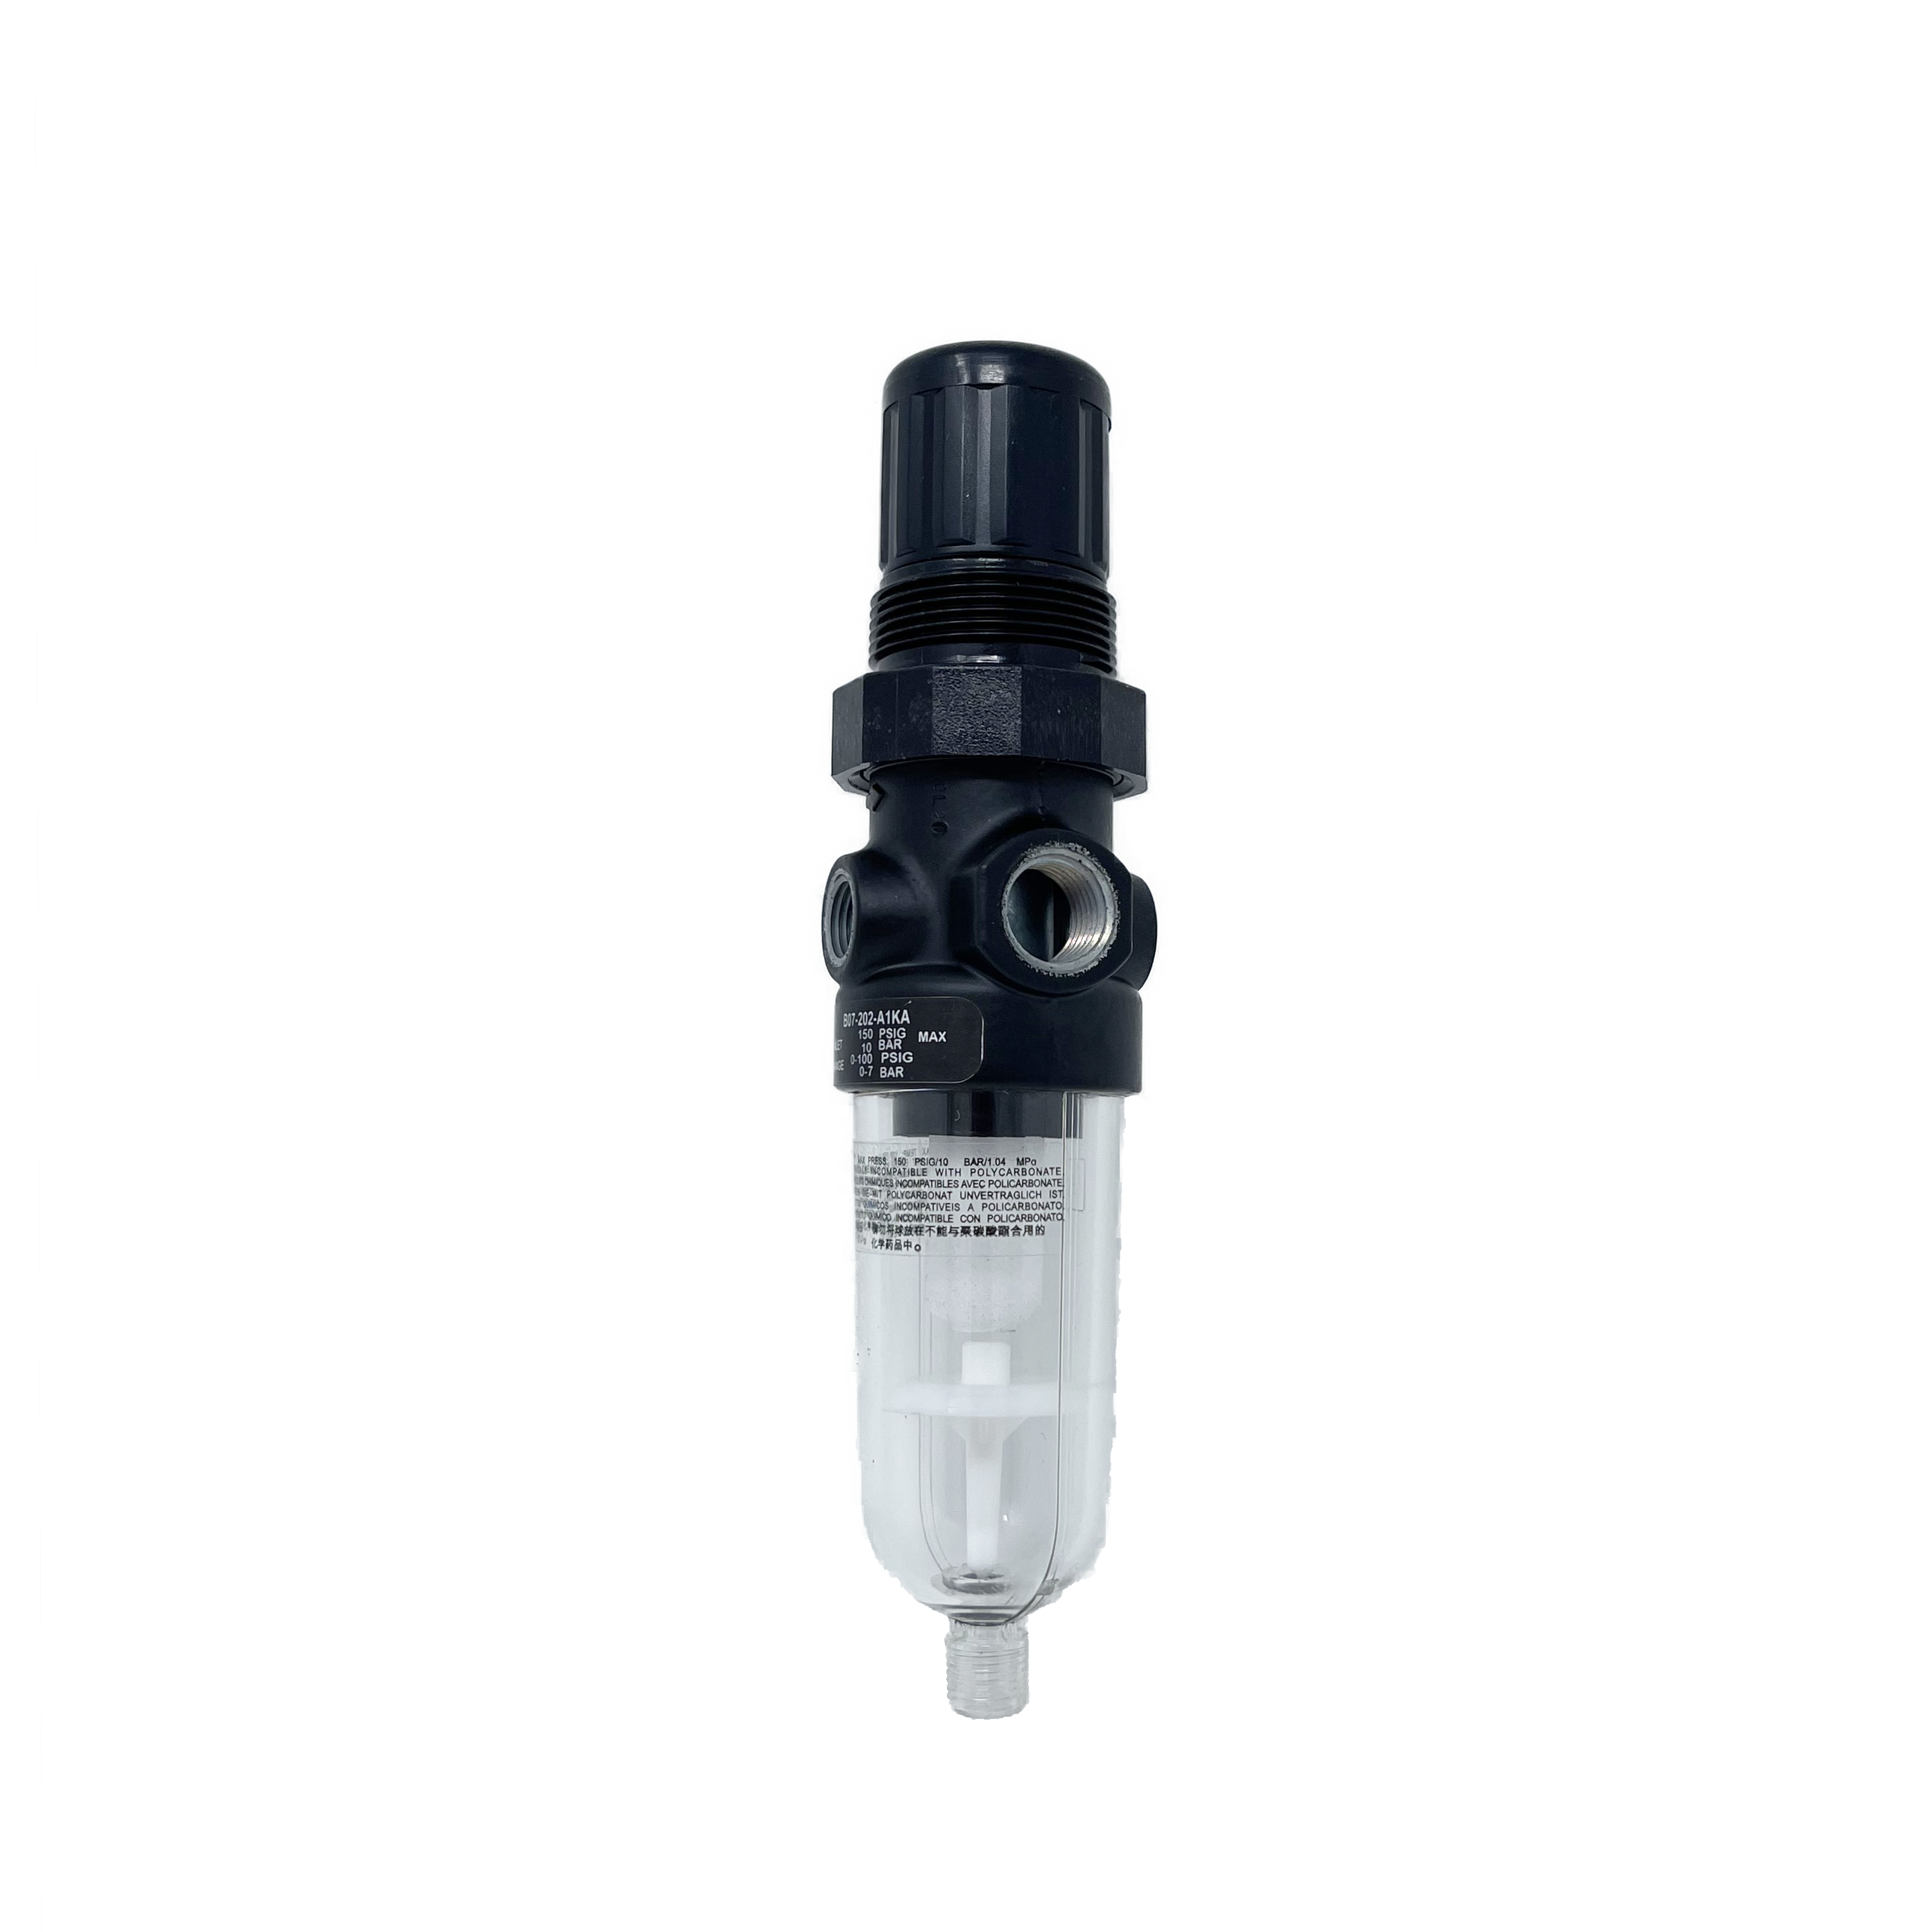 B07-101-A1KA : Norgren B07 miniature filter/regulator, Transparent Bowl, Relieving, Without Gauge, Automatic Drain, 5-Micron, 5